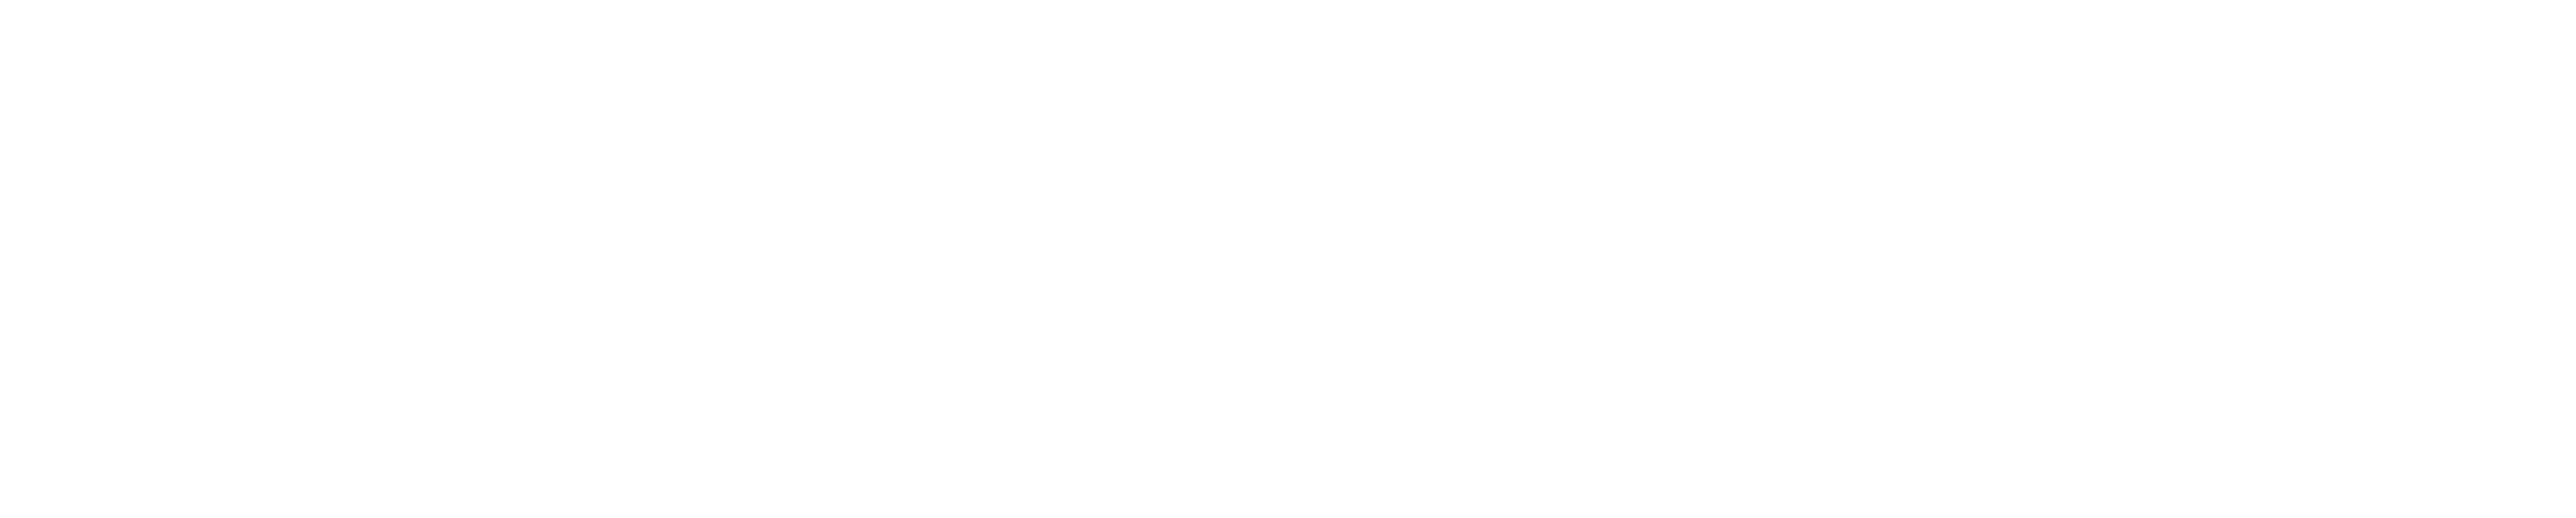 Arkema_logo.png